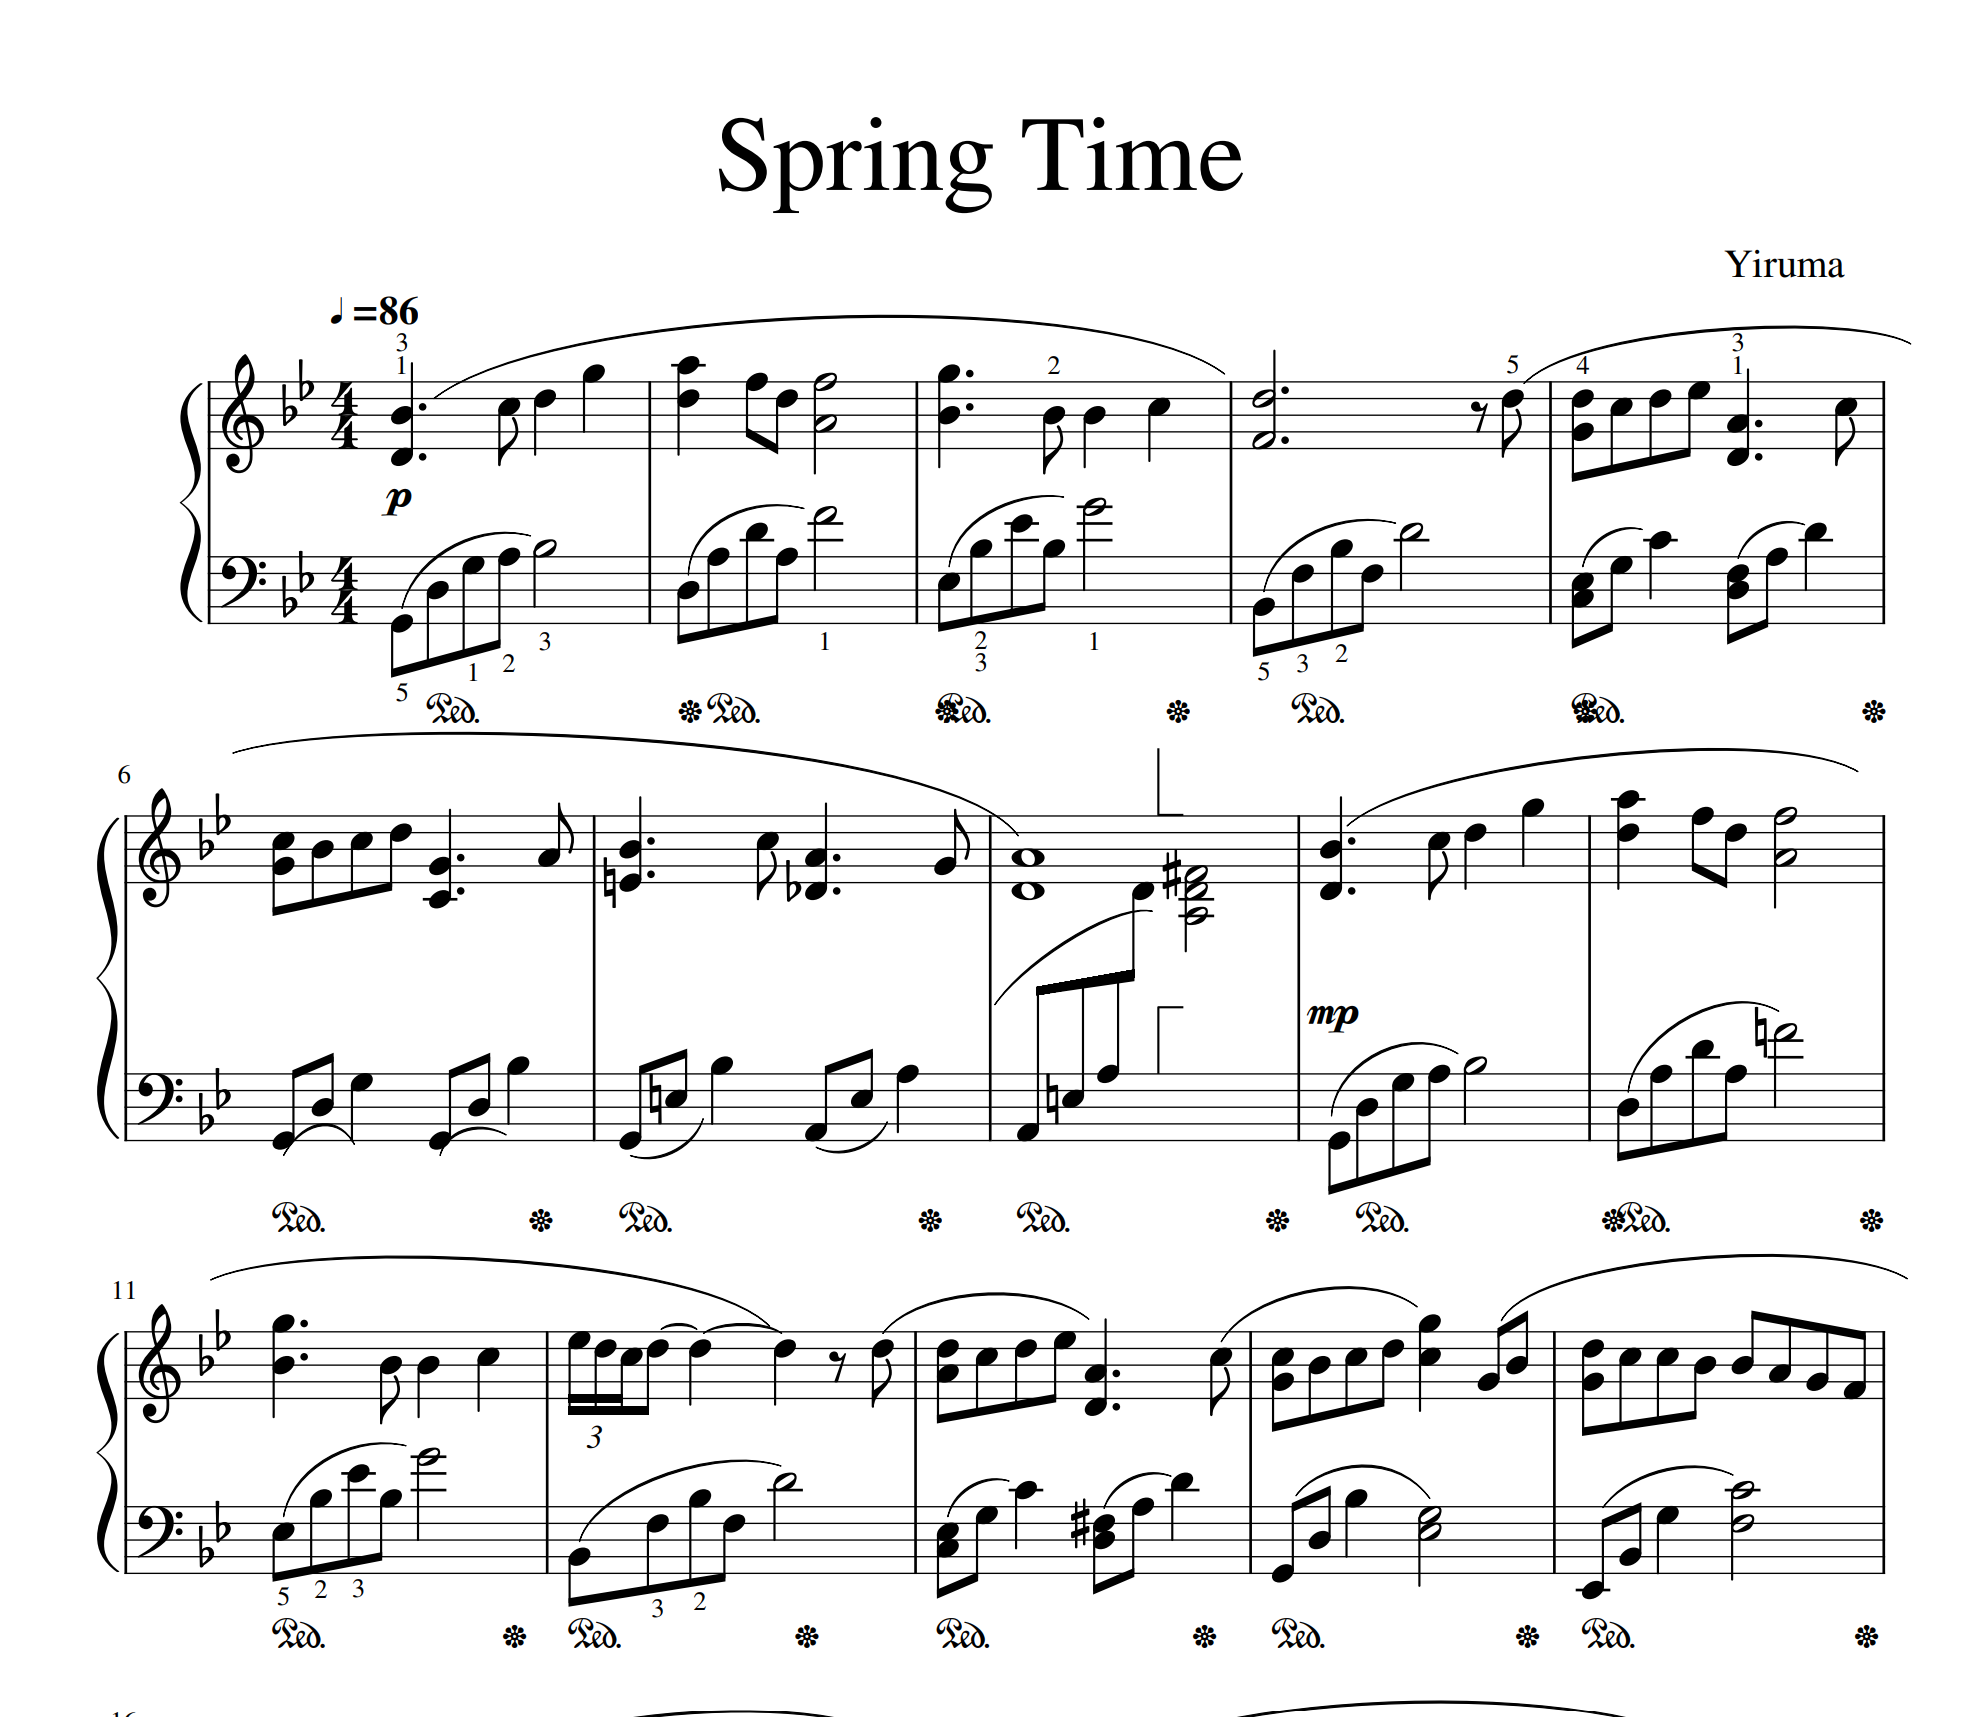 Yiruma - Spring Time sheet music for piano